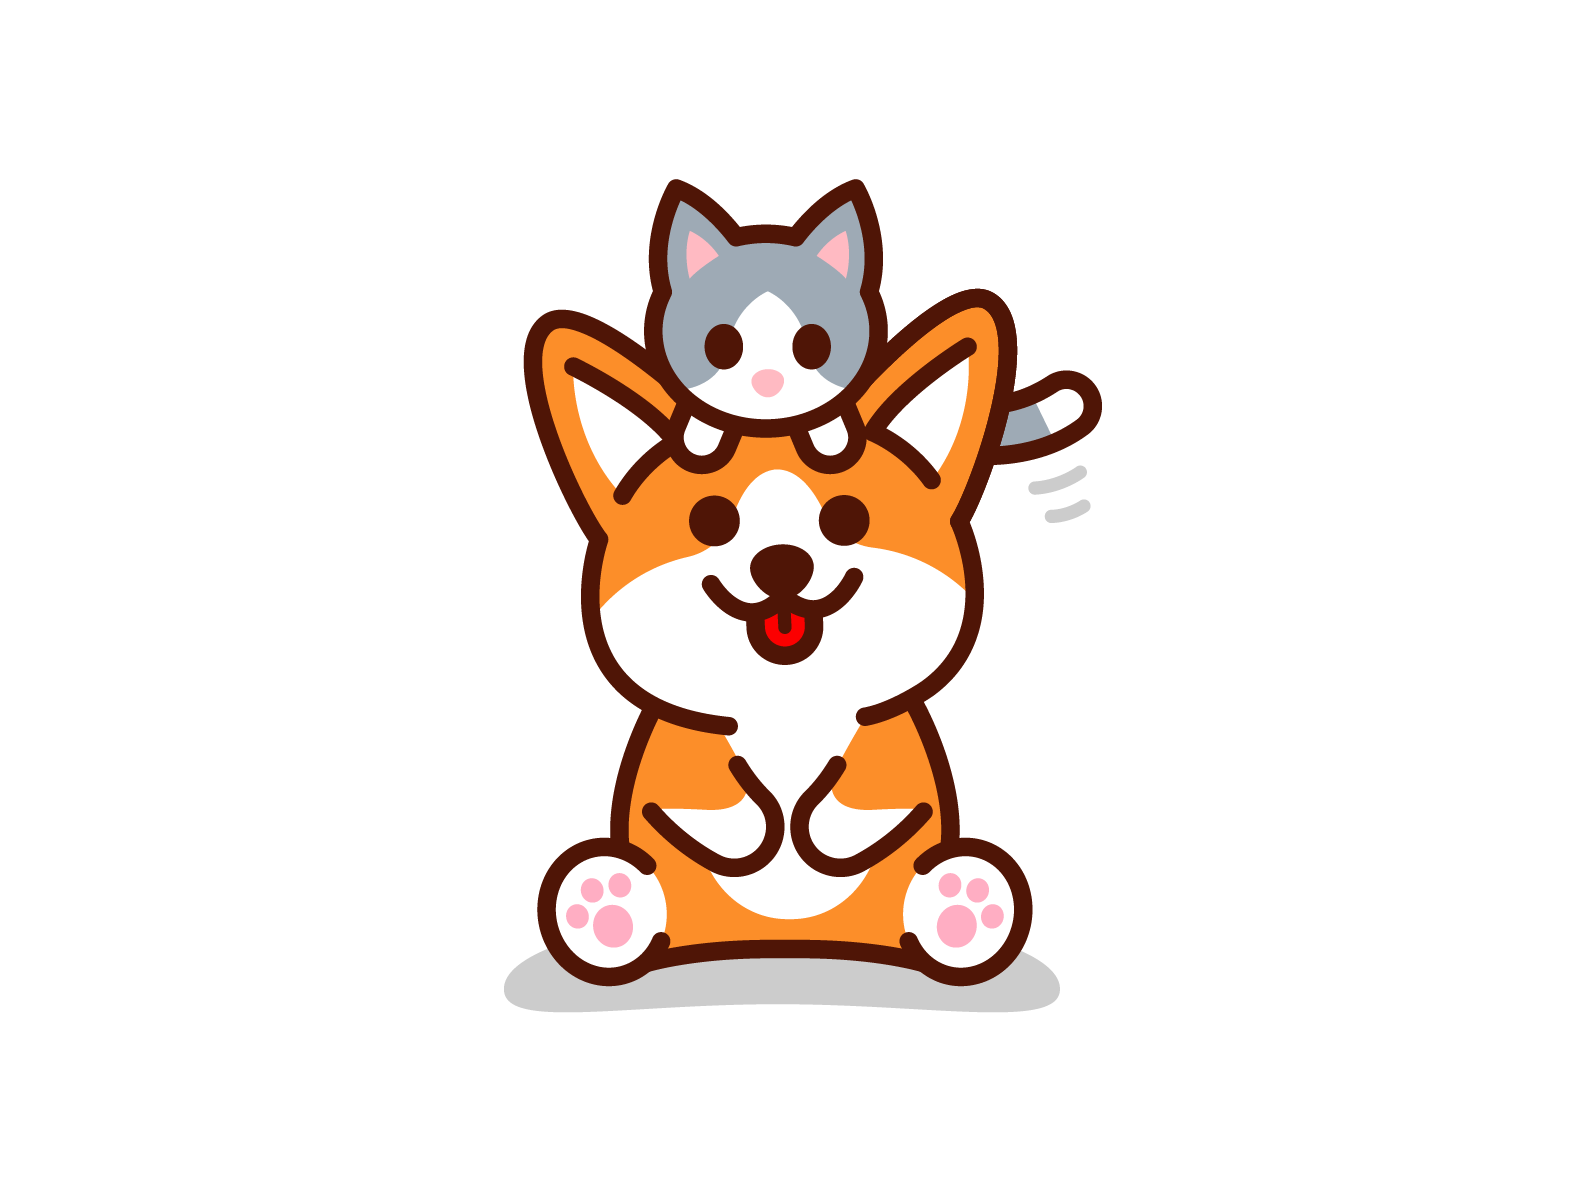 Cute Cartoon Cat Dog Face Anime Stock Vector Royalty Free 1230692119   Shutterstock